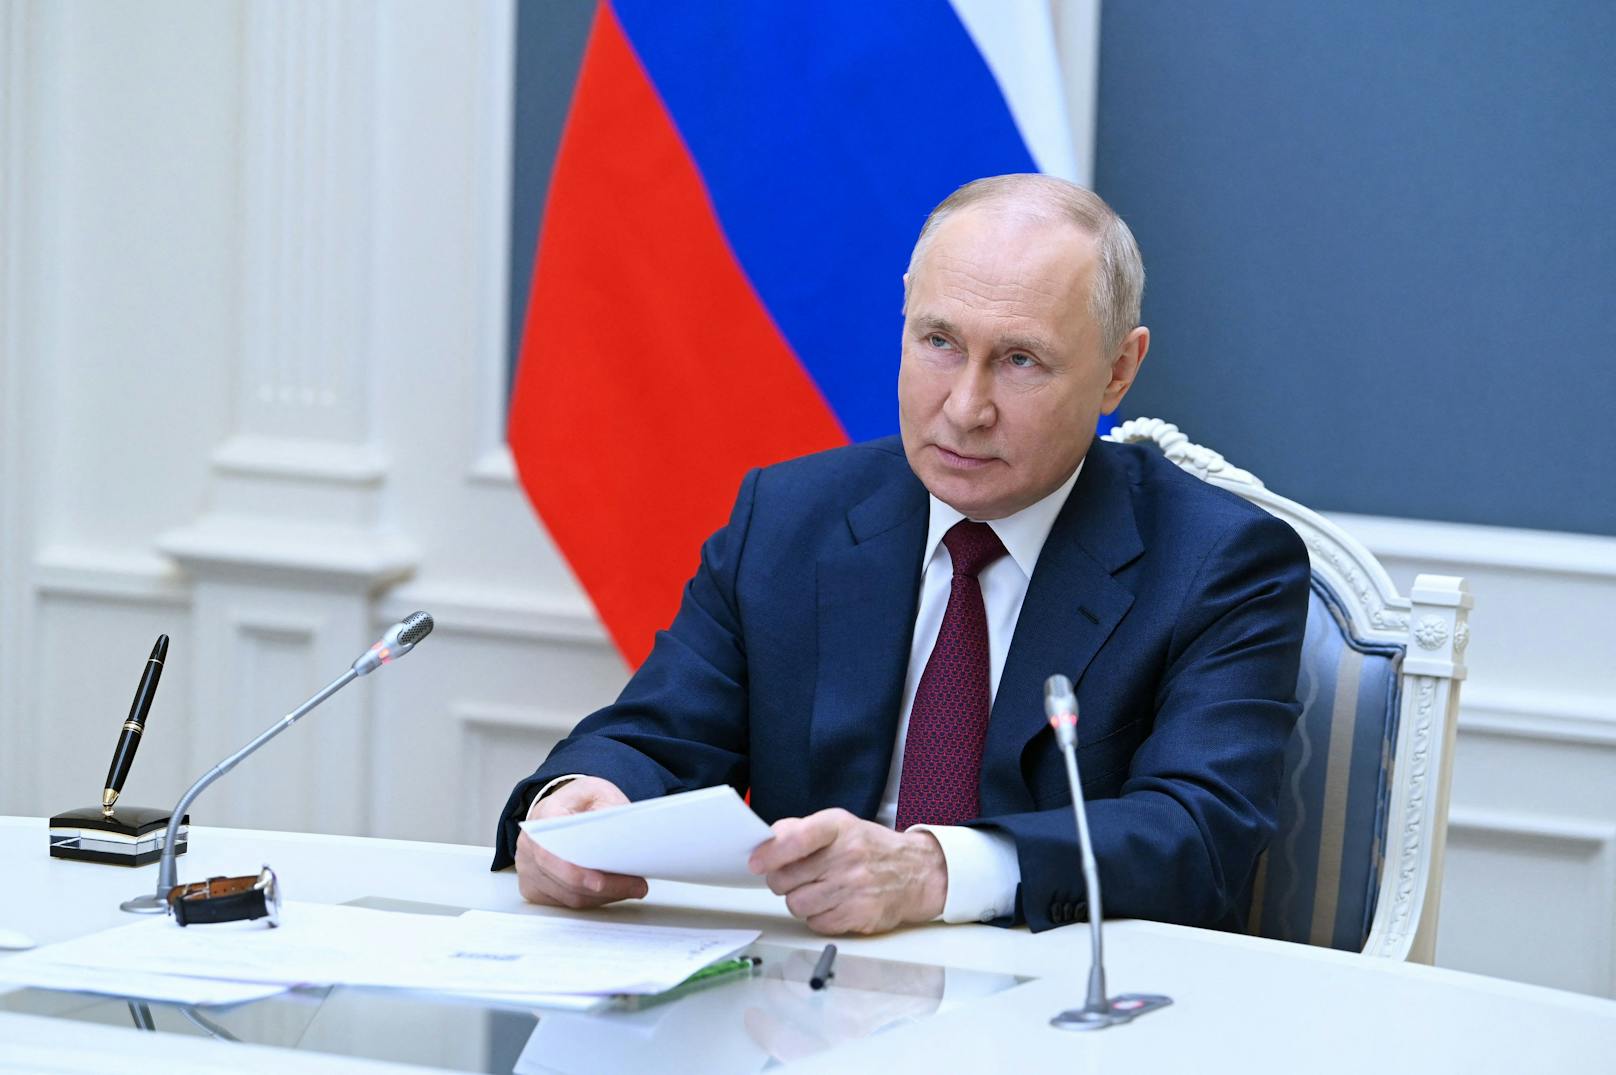 Festnahme droht – Putin reist nicht zu Polit-Gipfel